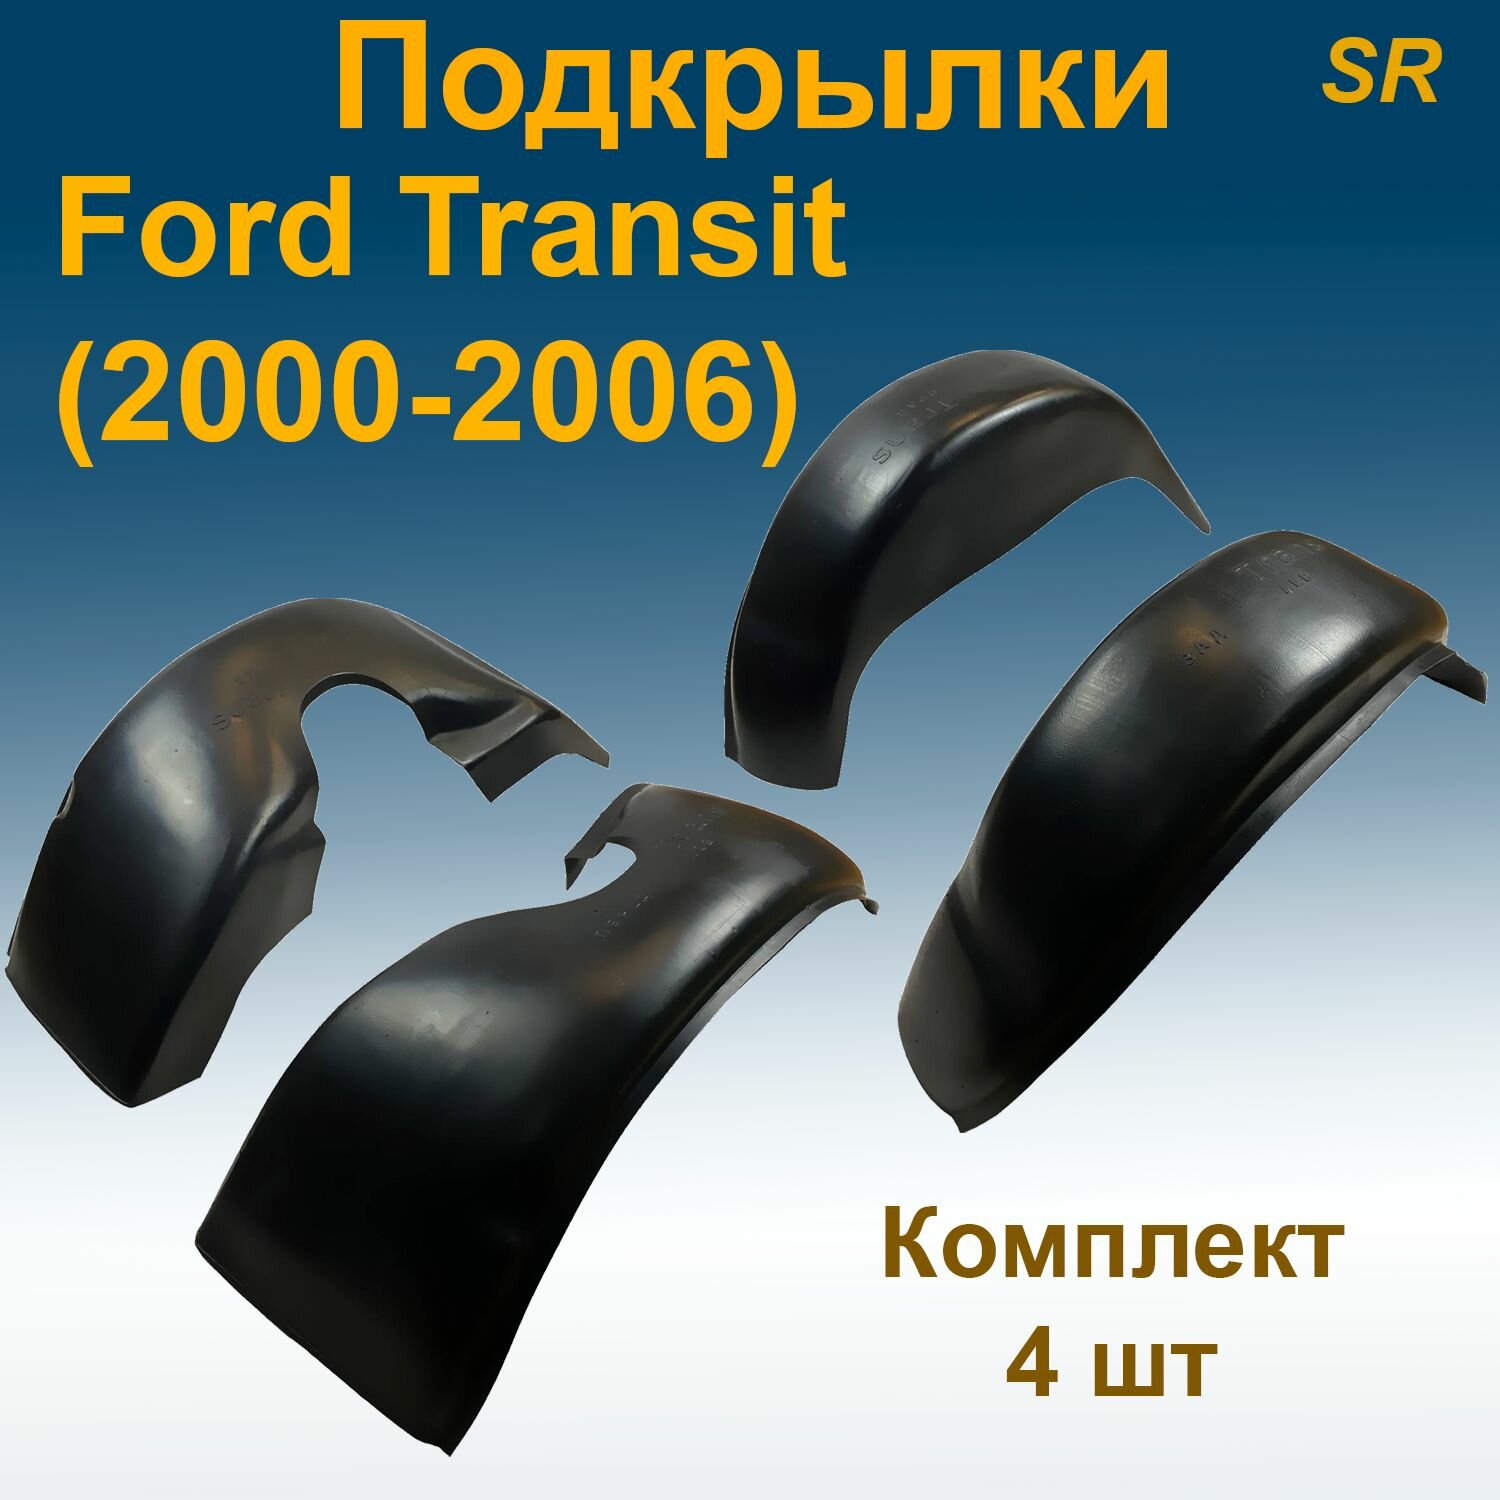 Подкрылки передние + задние для Ford Transit (2000-2006) Star 4 шт